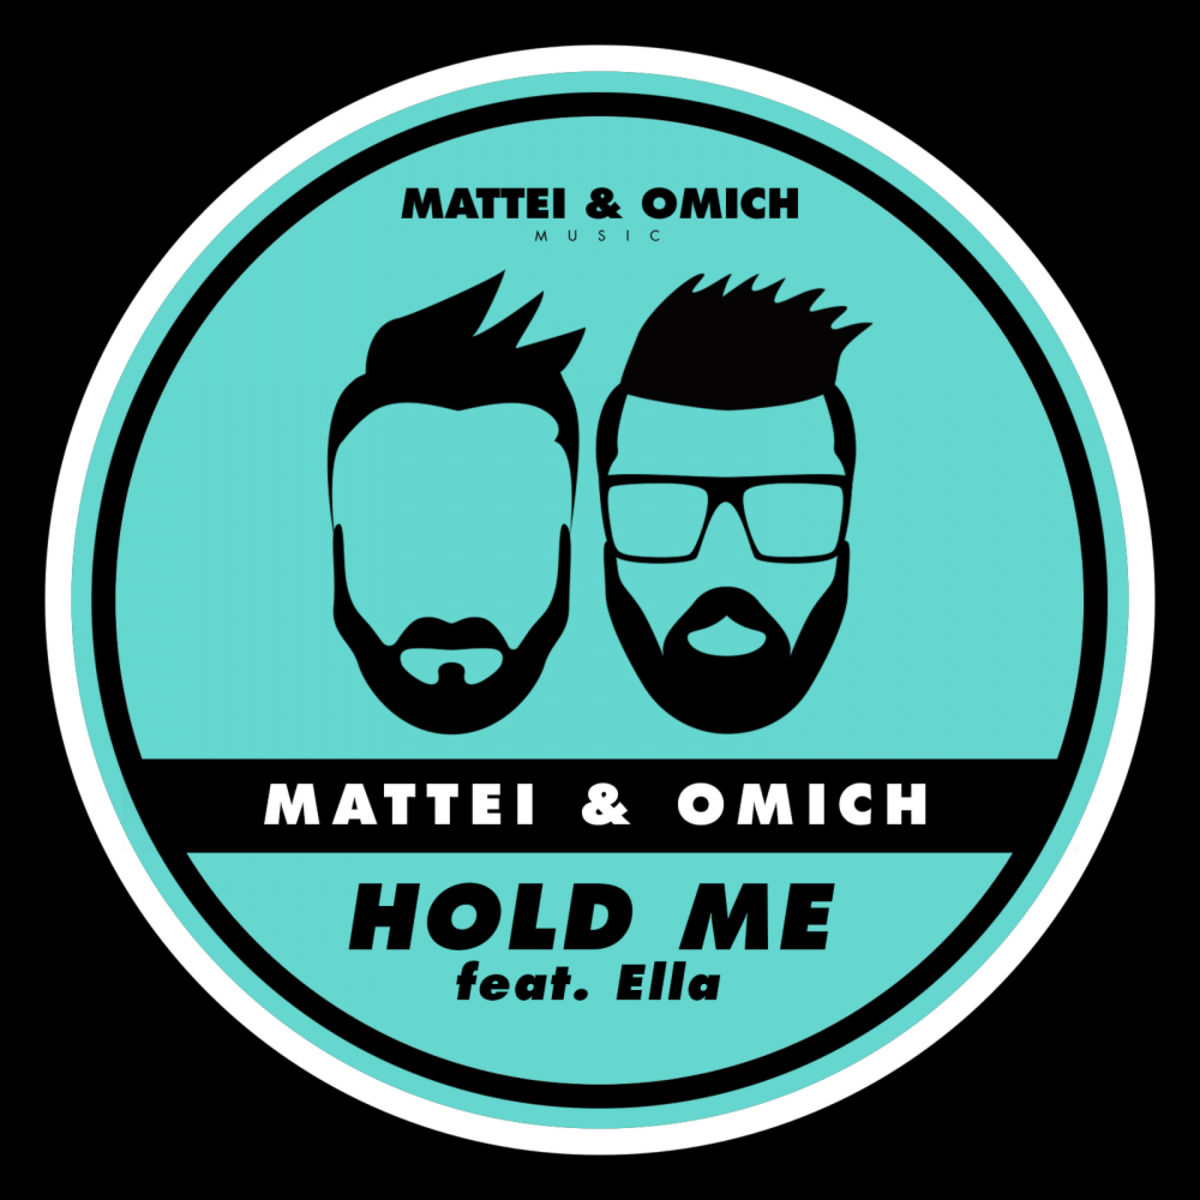 Mattei & Omich ft Ella - Hold Me / Mattei & Omich Music